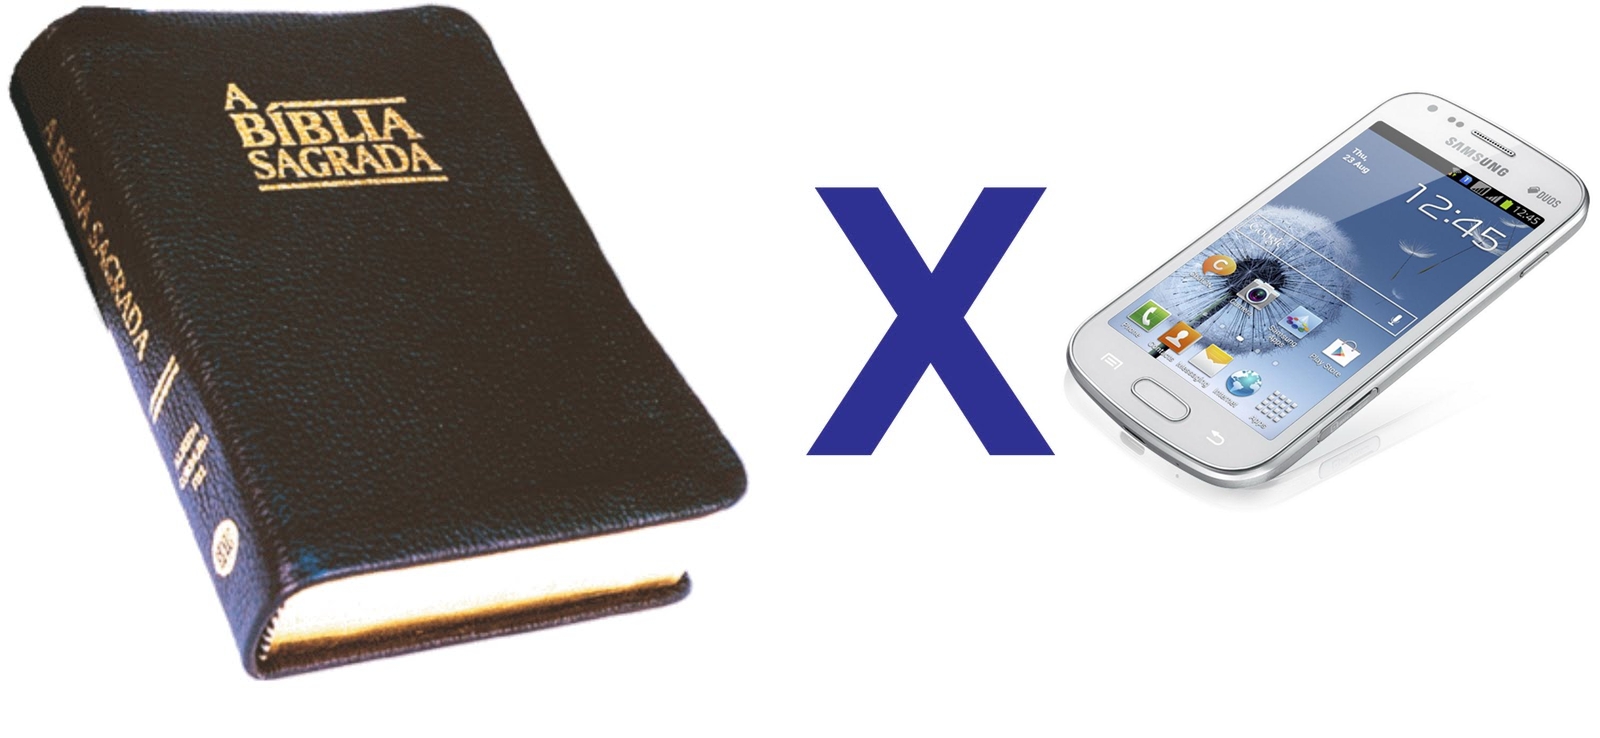 A Bíblia vs o Celular